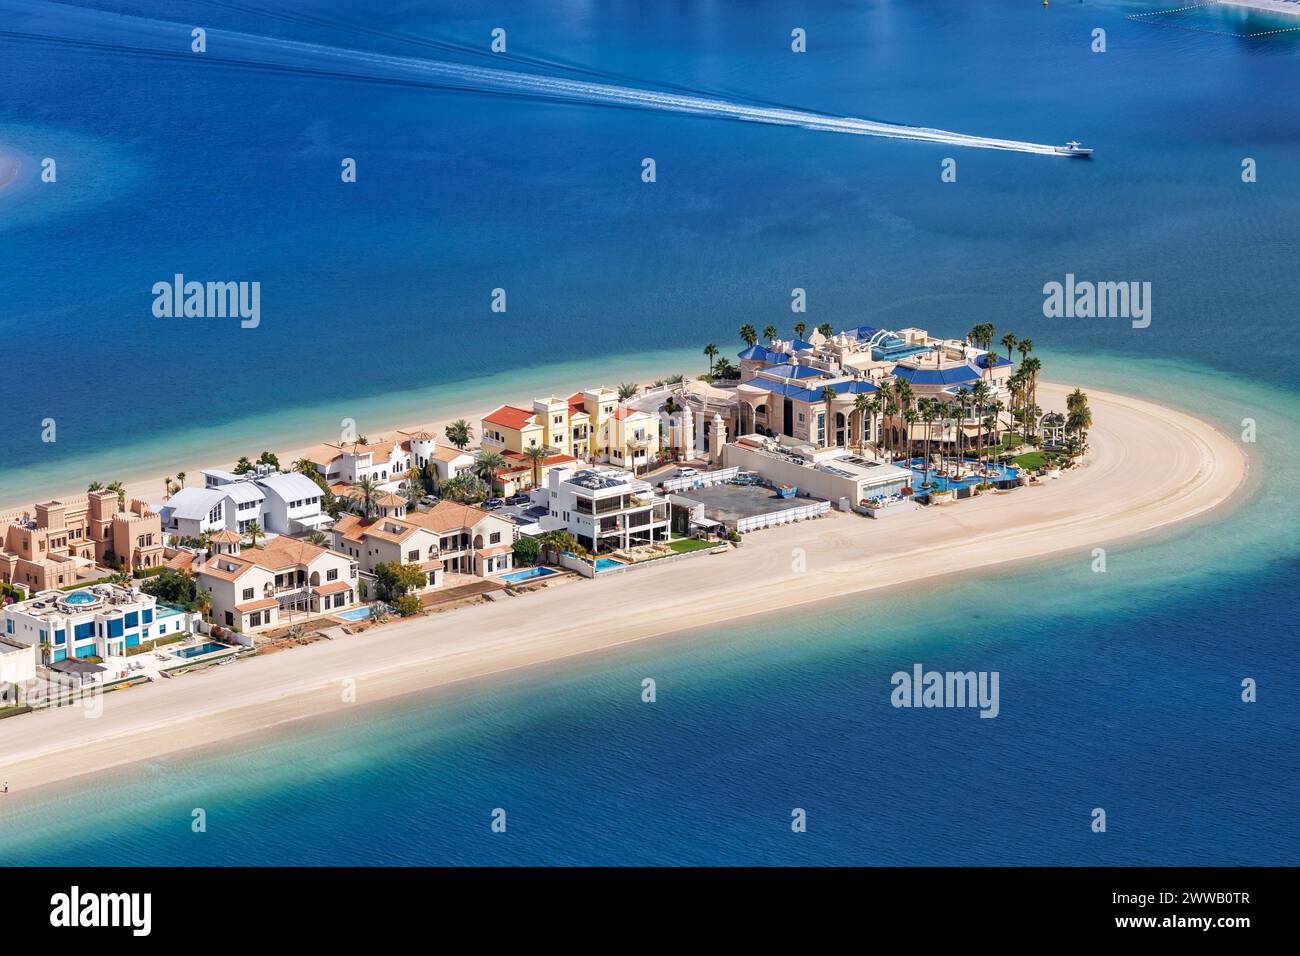 Dubai luxury villas real estate on The Palm Jumeirah artificial island with beach vacation Stock Photo